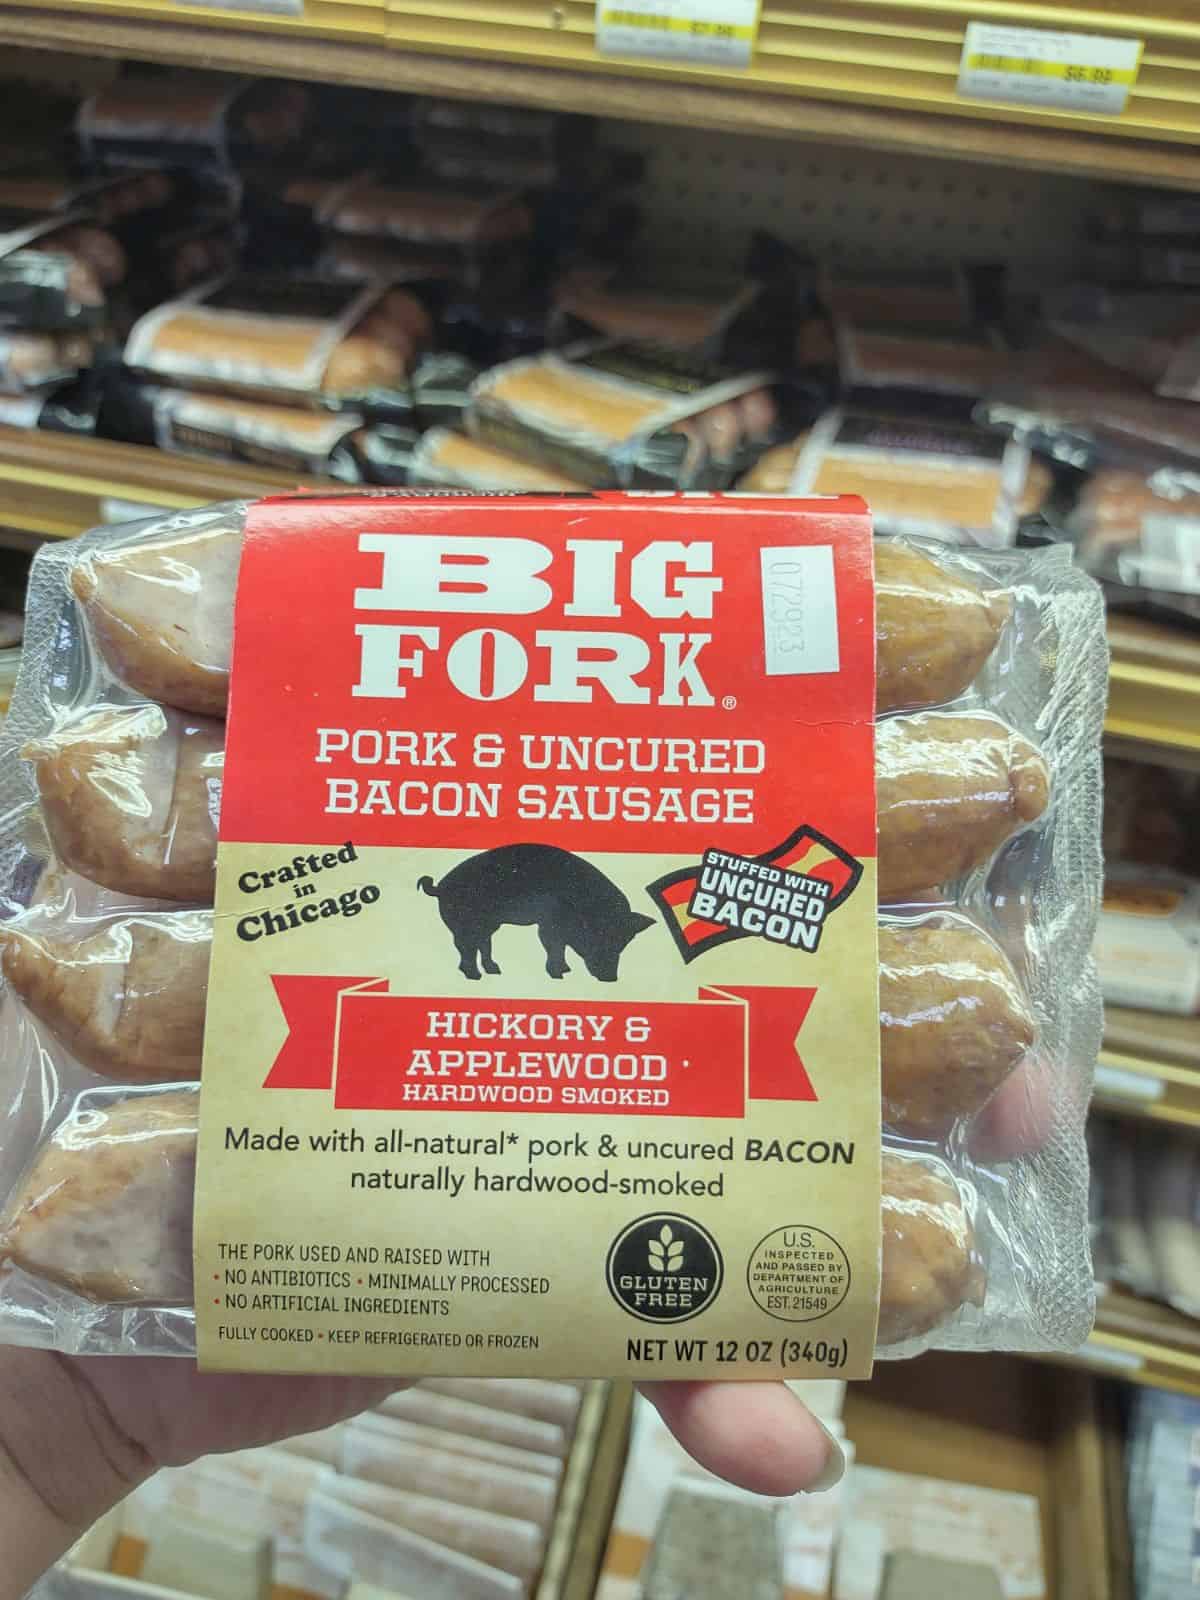 Holding up a package of Pork Fork Pork & Uncured Bacon Sausage